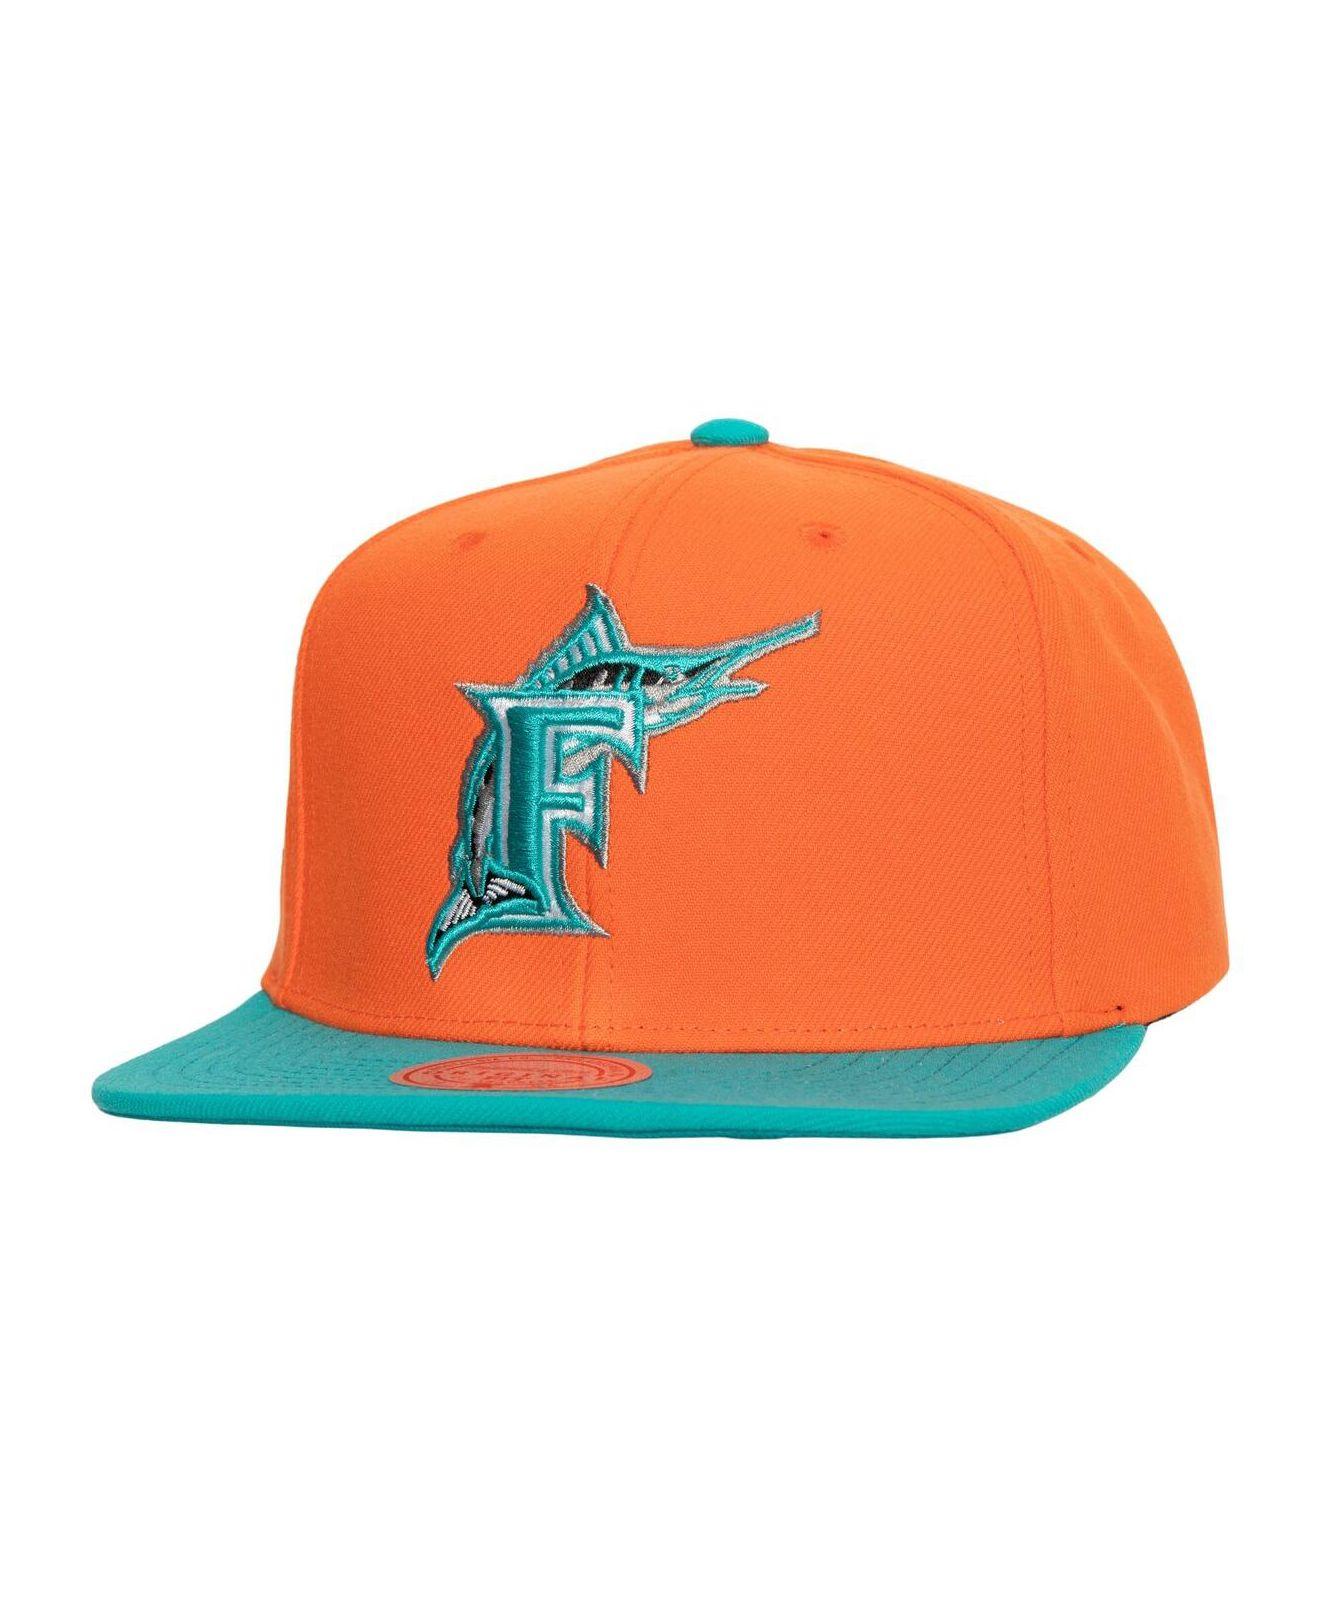 Mitchell & Ness Orange, Teal Florida Marlins Hometown Snapback Hat for Men